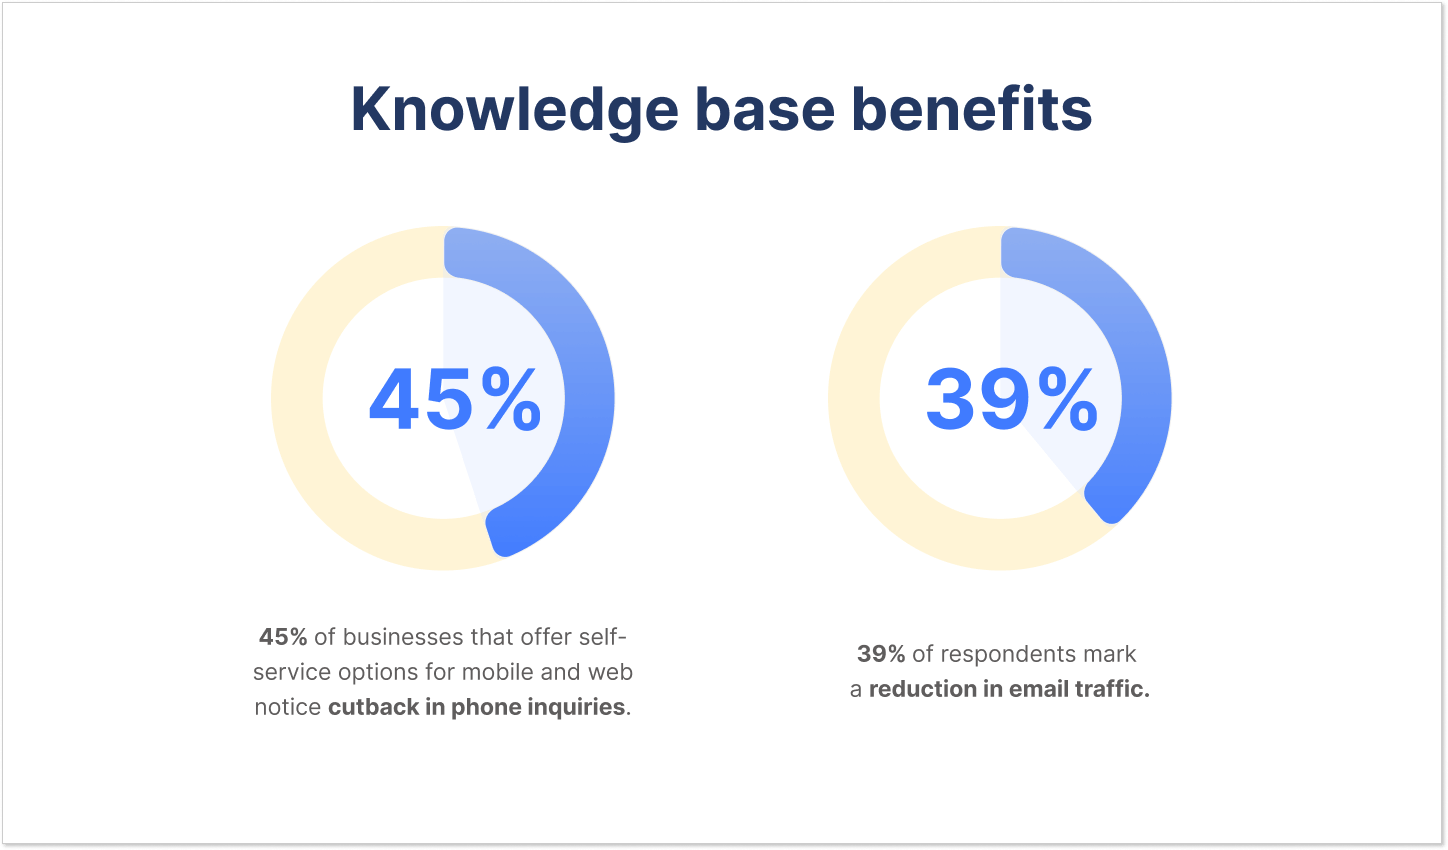 Knowledge base benefits